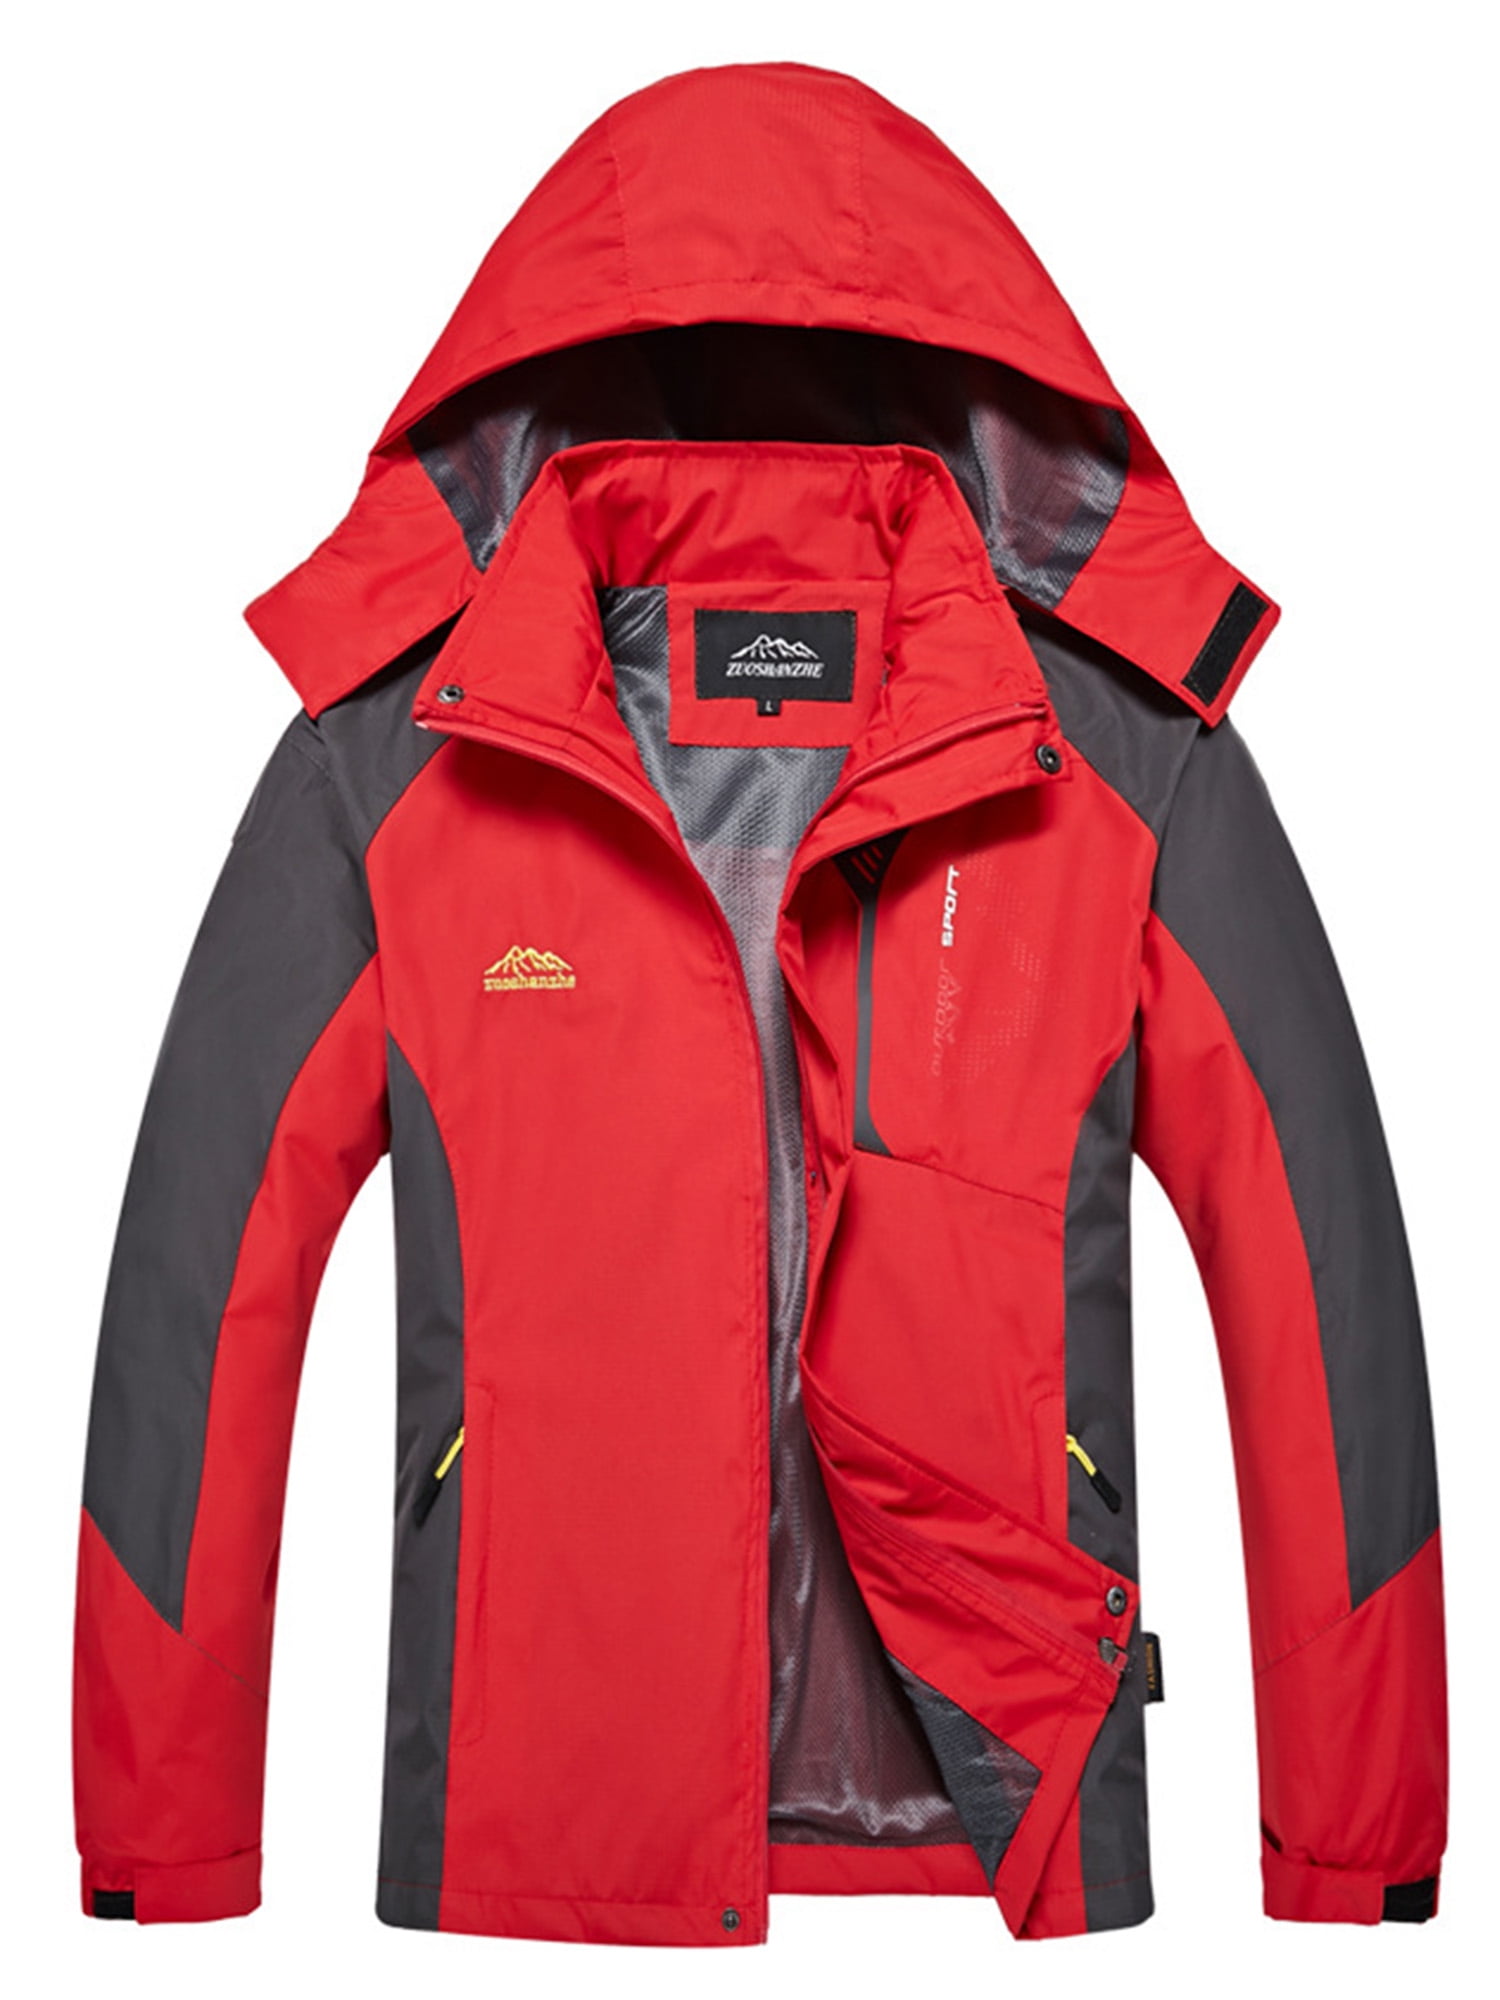 Magellan Outdoors Women's Packable Rain Jacket